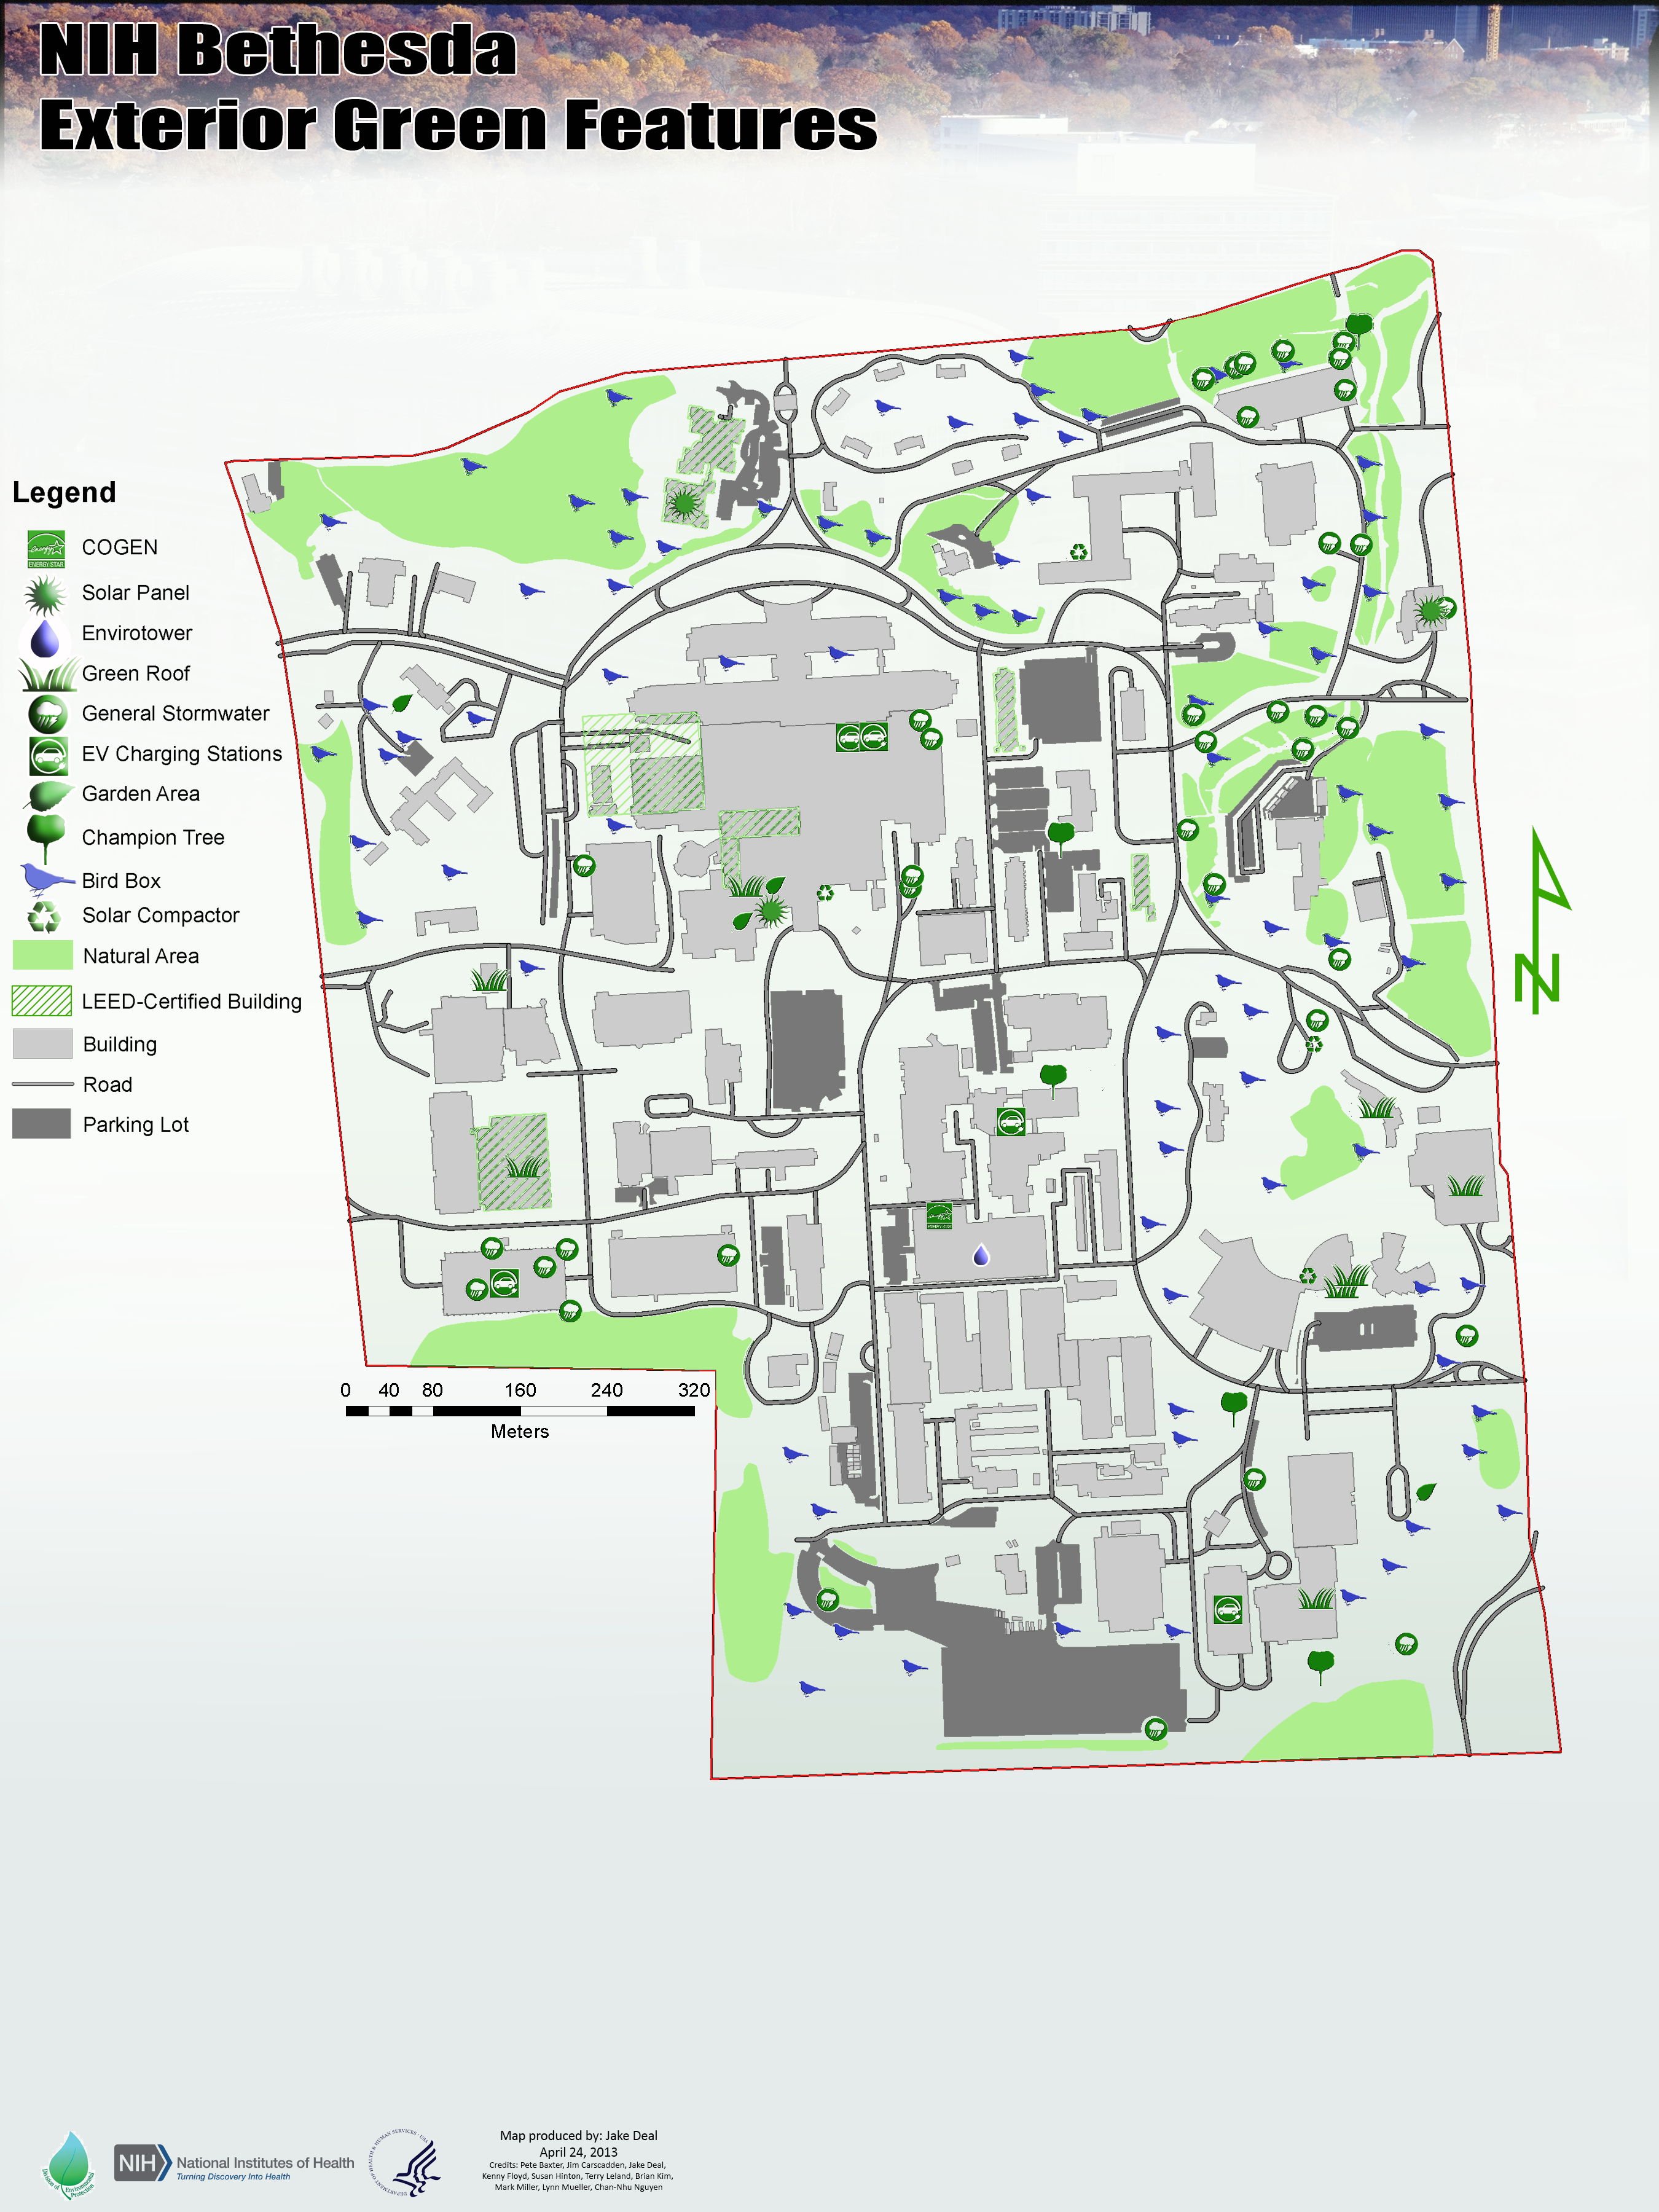 NIH Bethesda Exterior Green Features Map